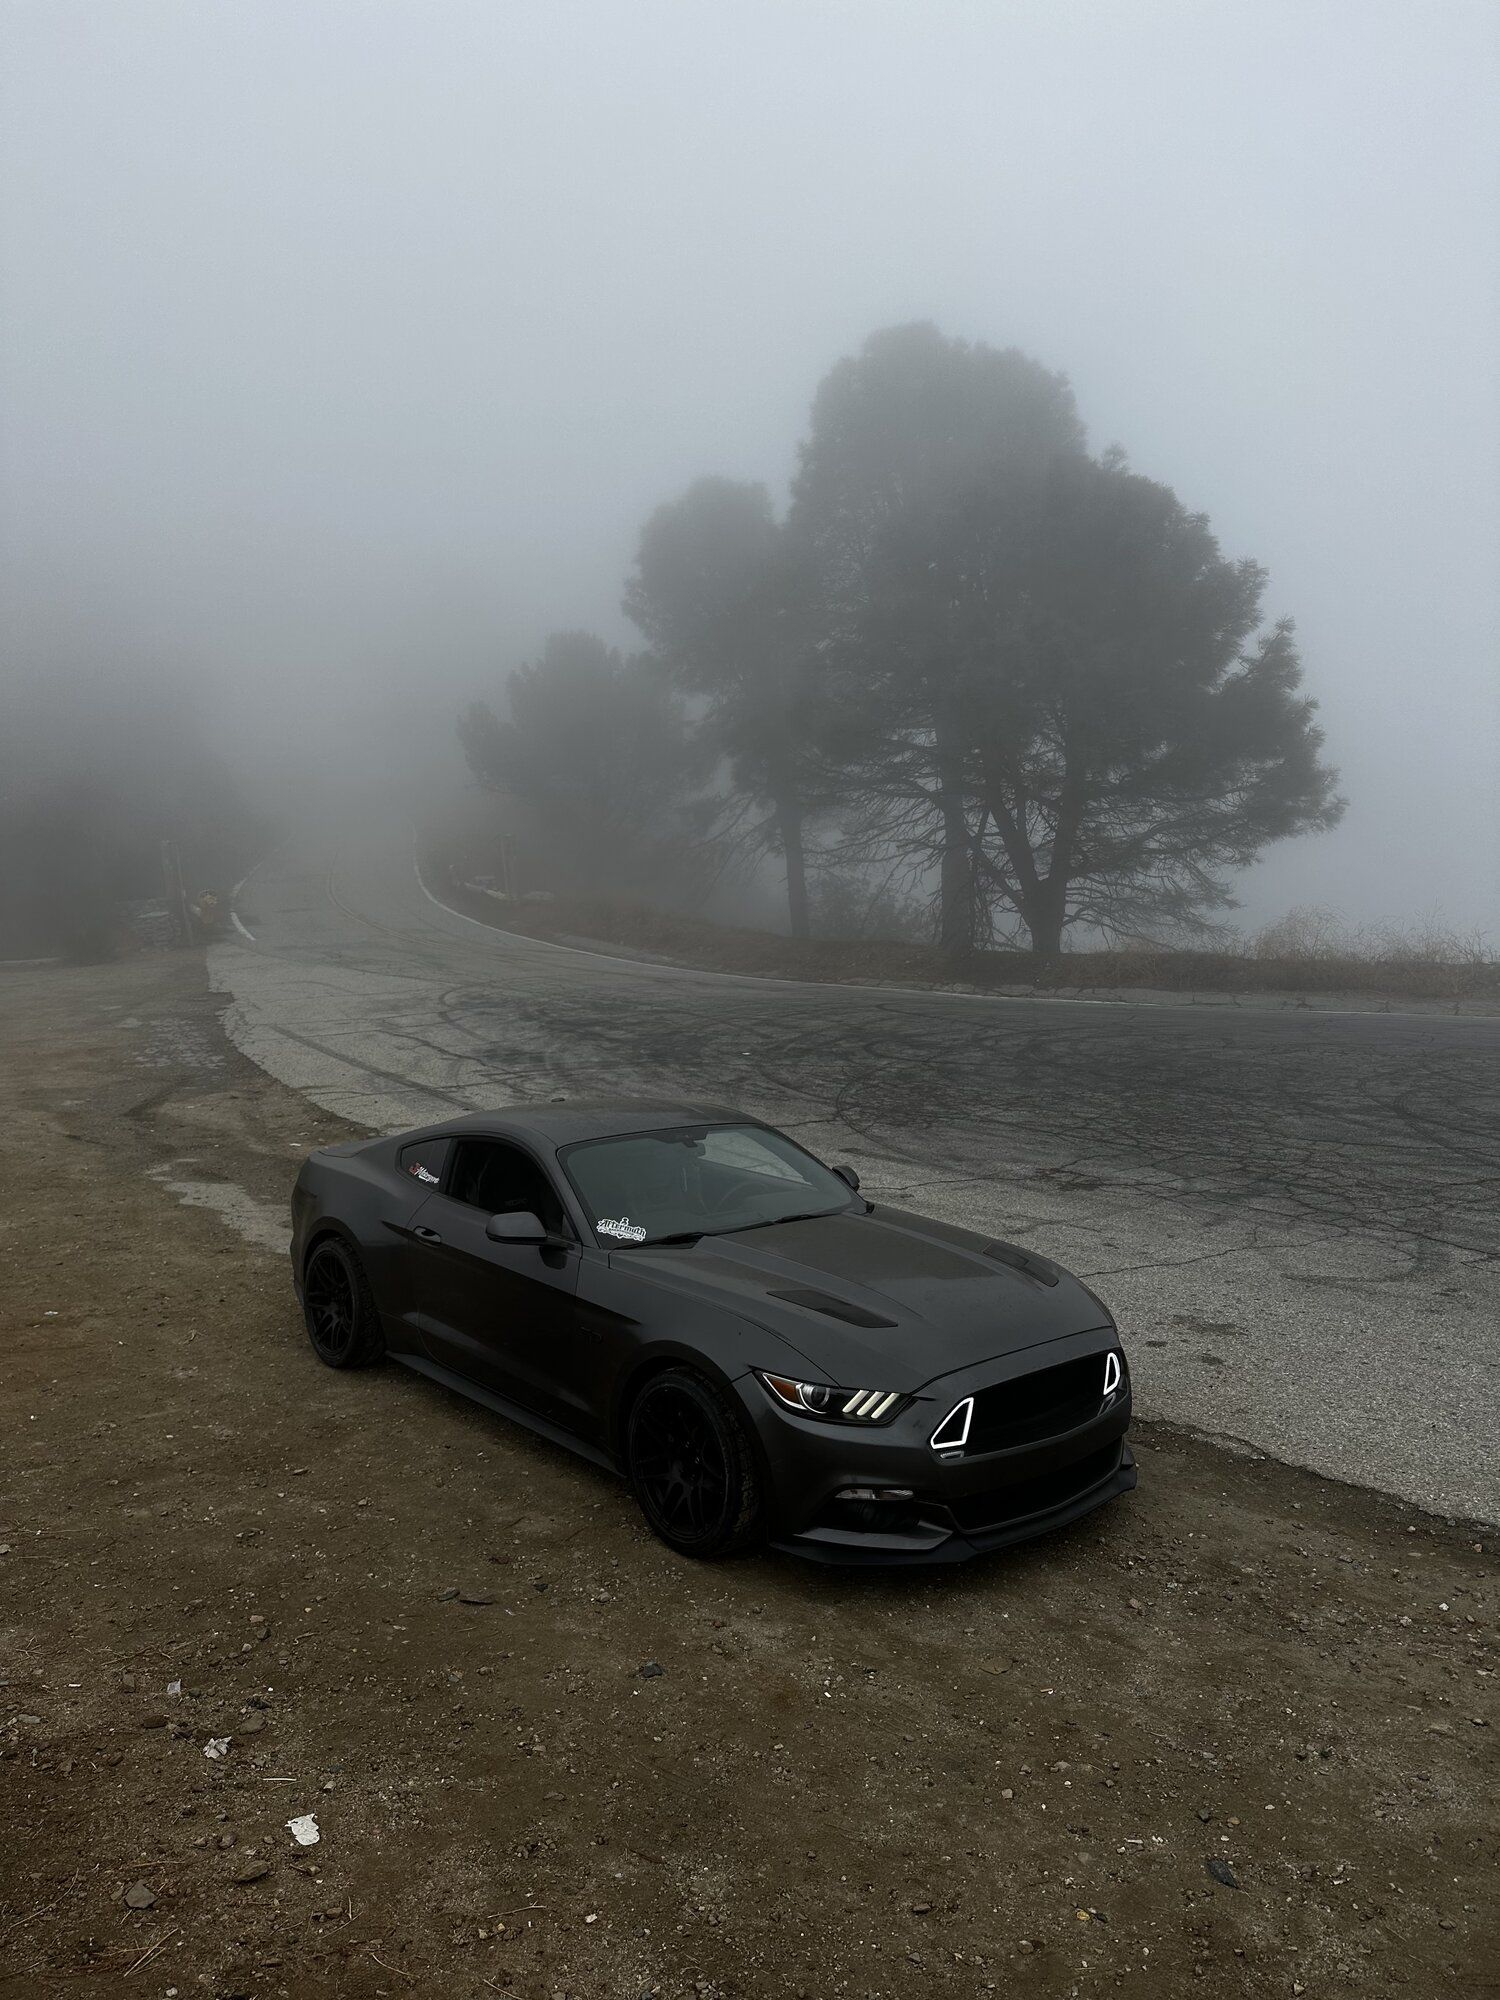 2015 Mustang
GT  (The cumstang)